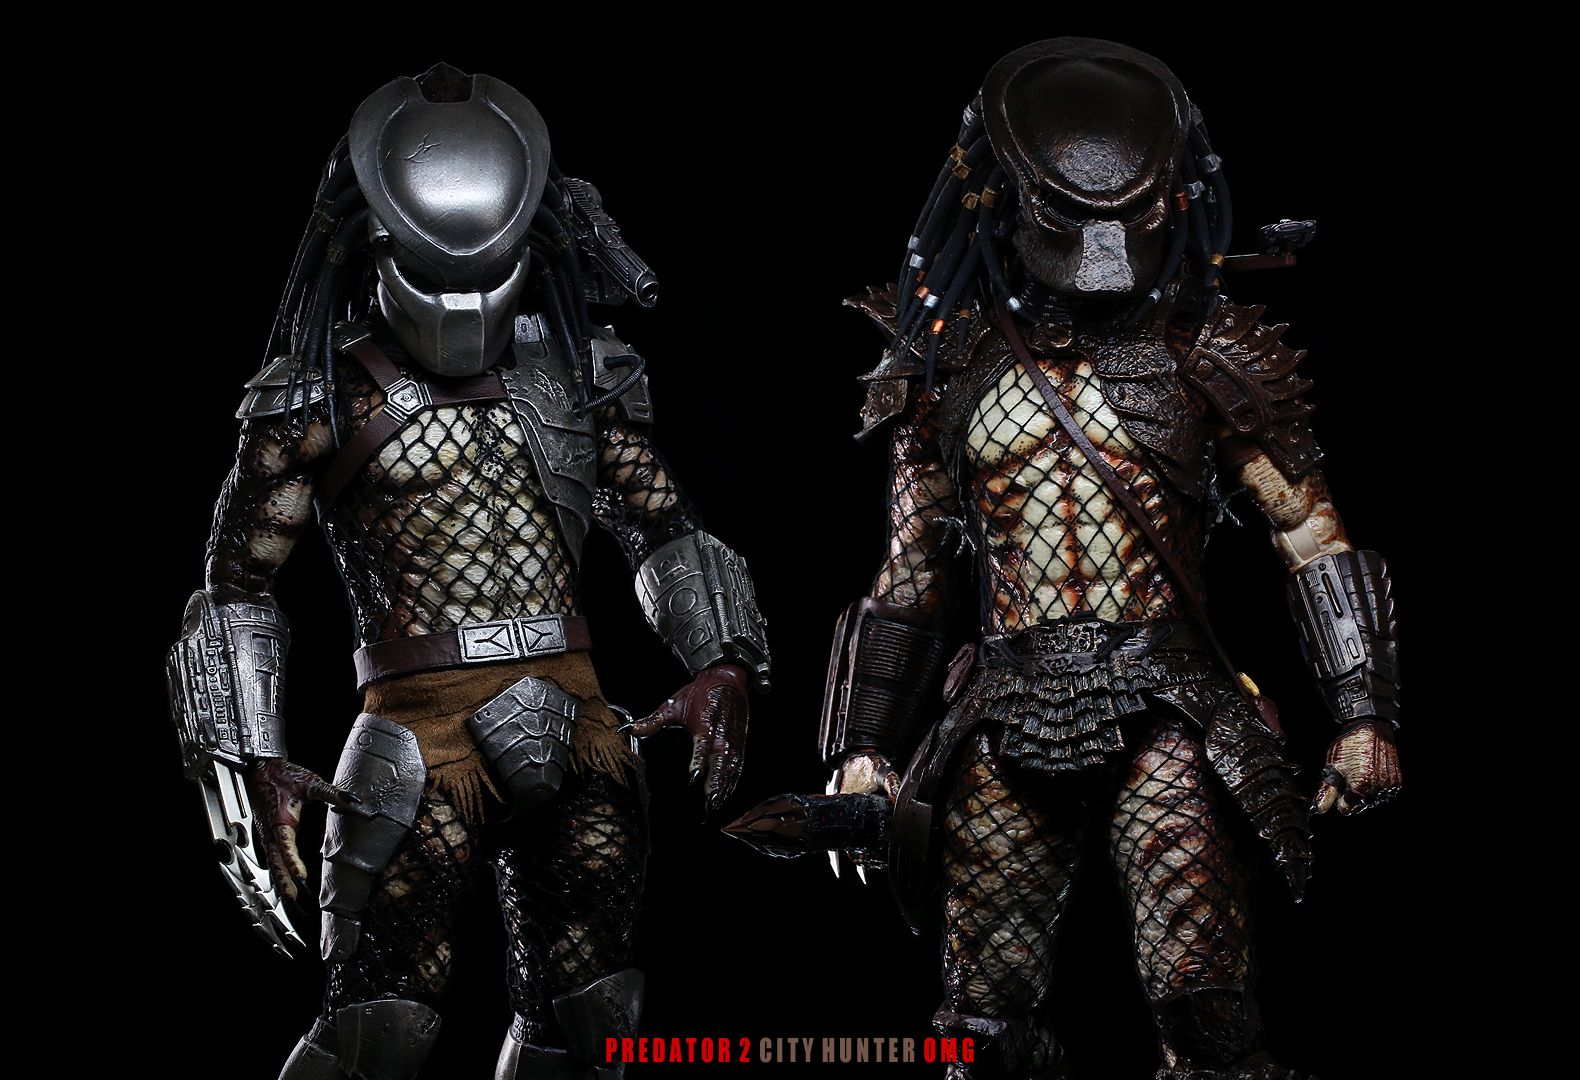 [Hot Toys] Predator 2: City Hunter Predator - 1/6 scale - LANÇADO!!! <fotos OMG> pág 11 - Página 11 CityHunterPredHD220_zps50eef95d